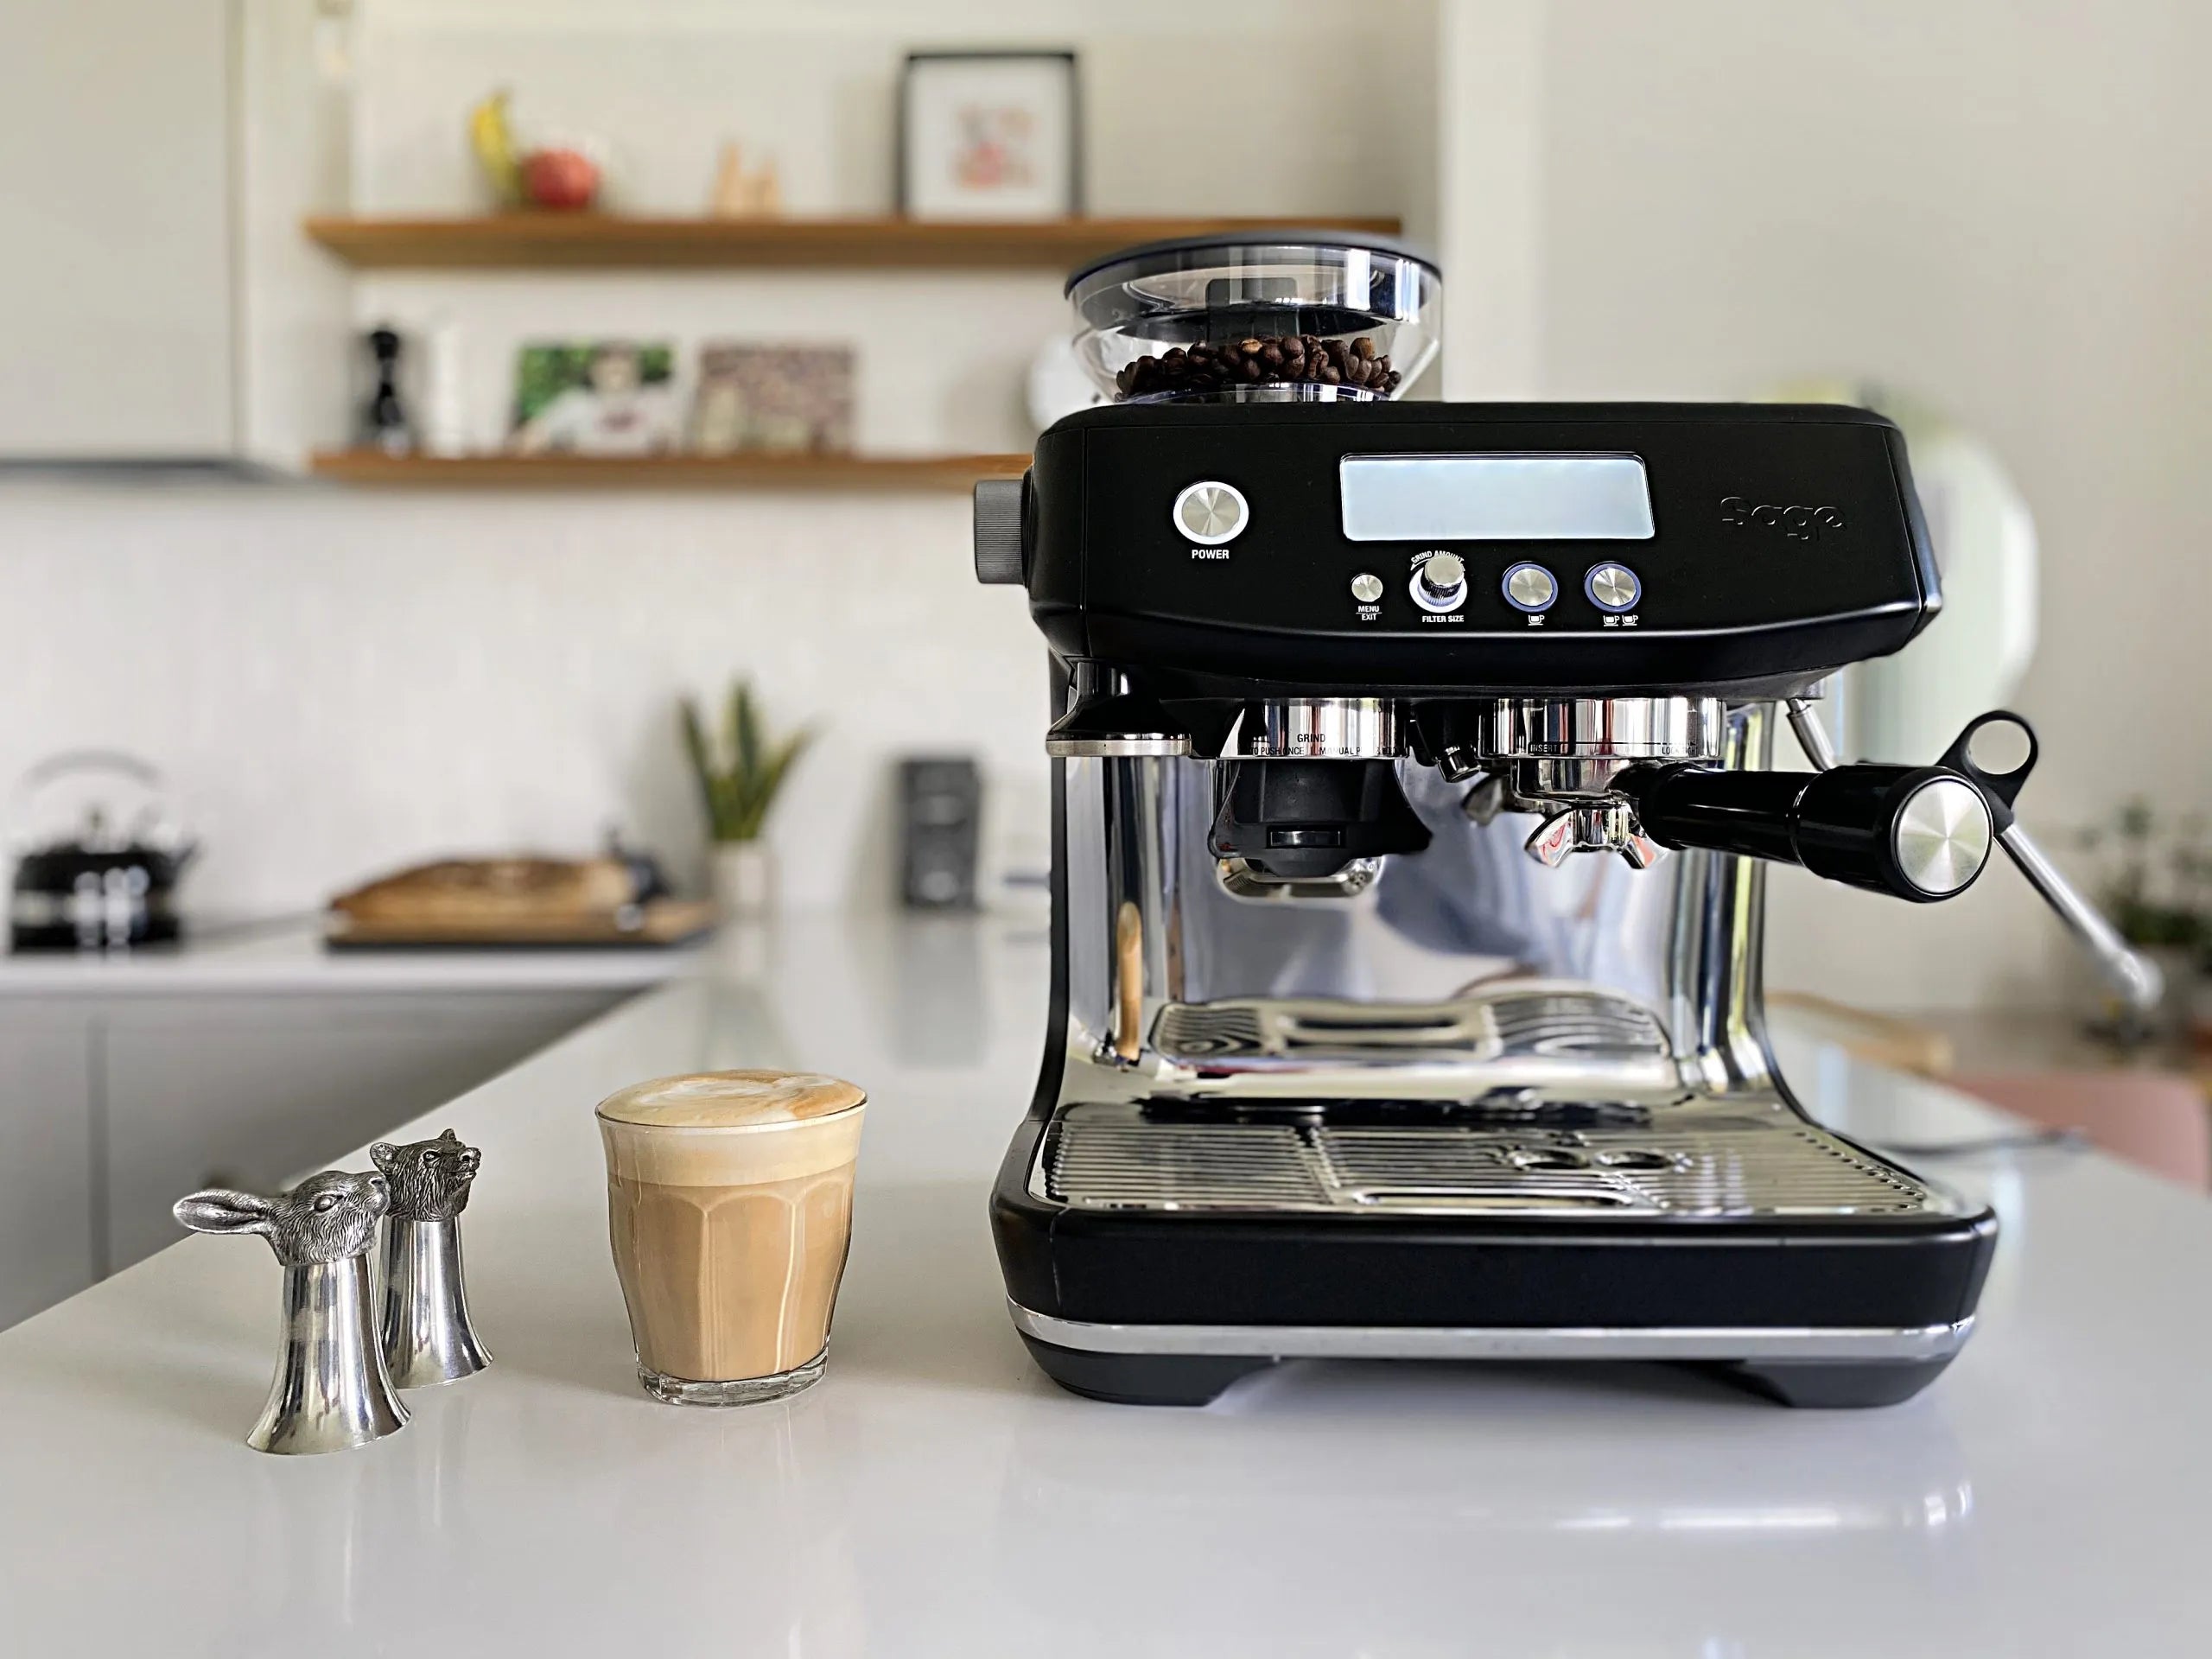 Pulizia della macchina da caffè espresso automatica - Macchine da caffè